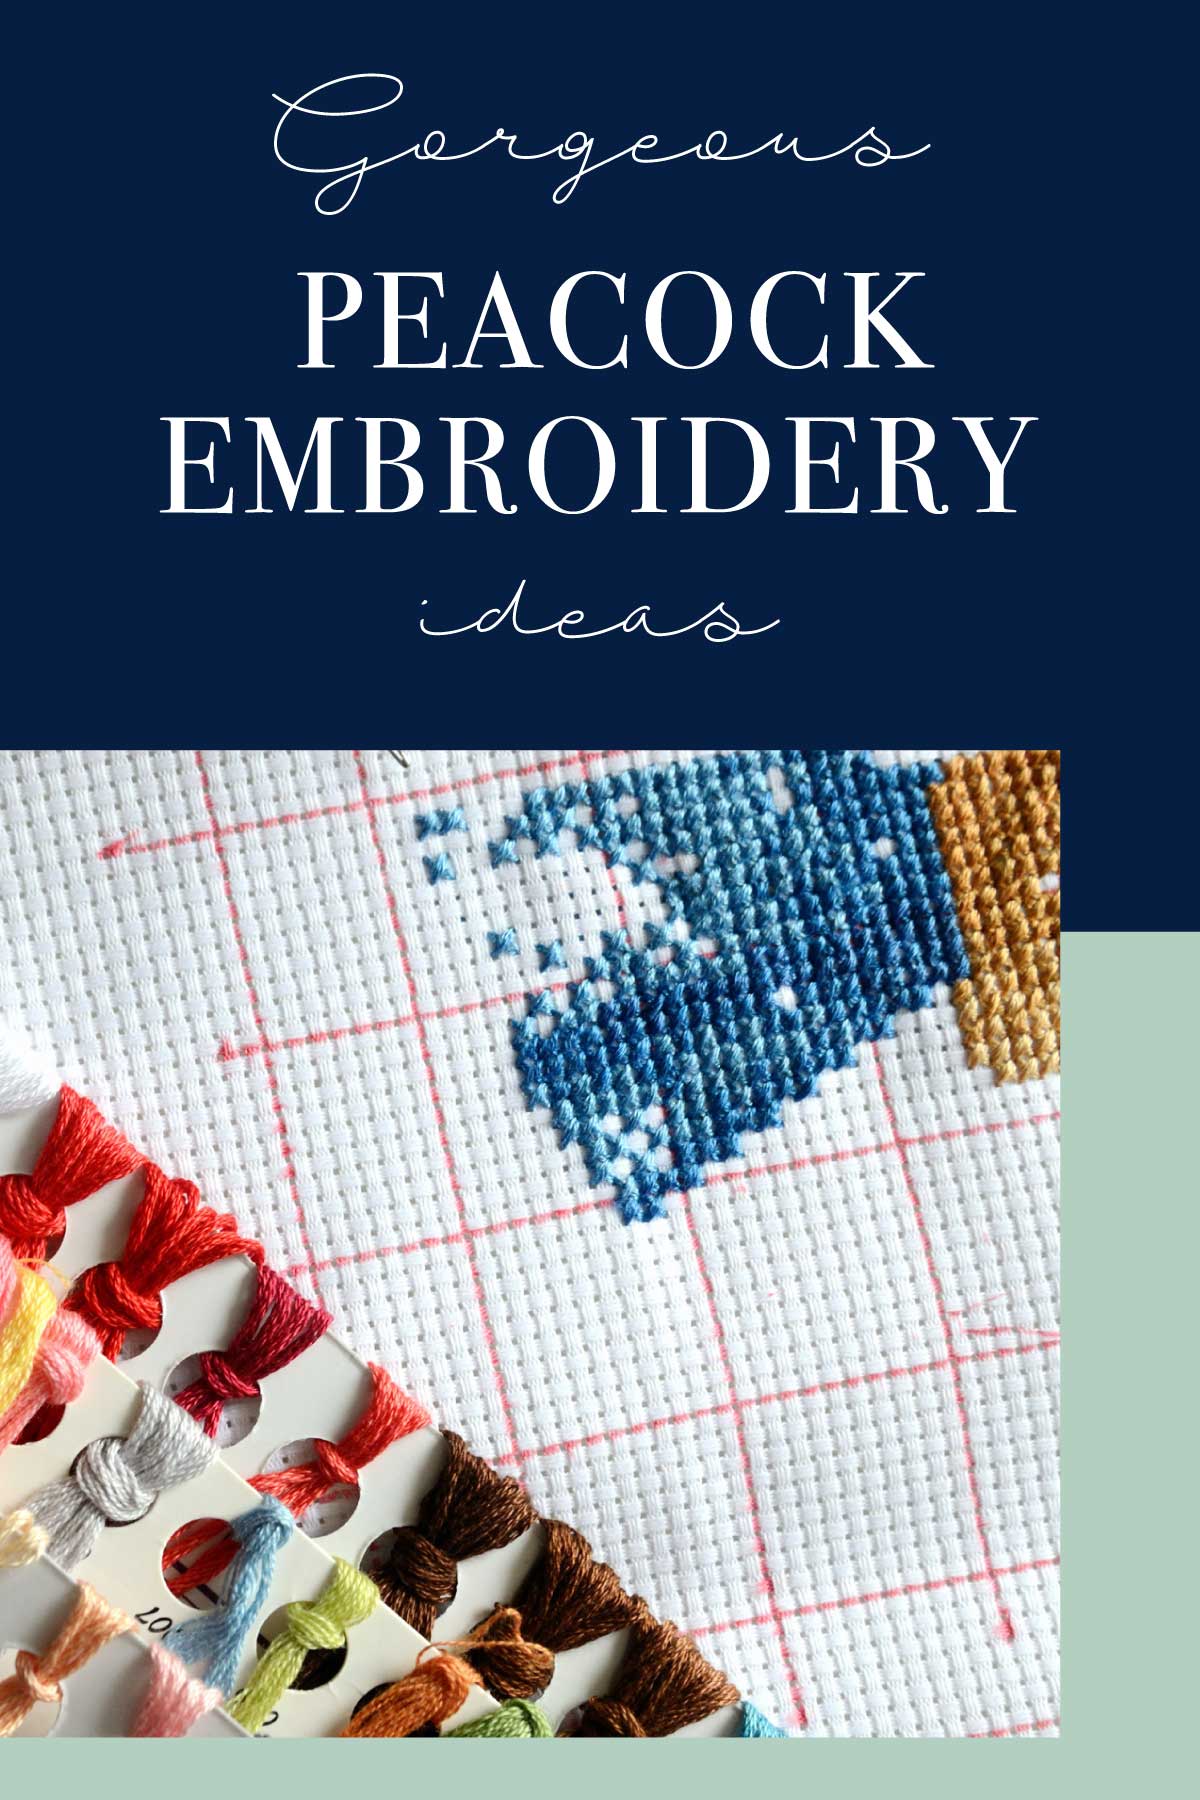 Peacock embroidery Ideas